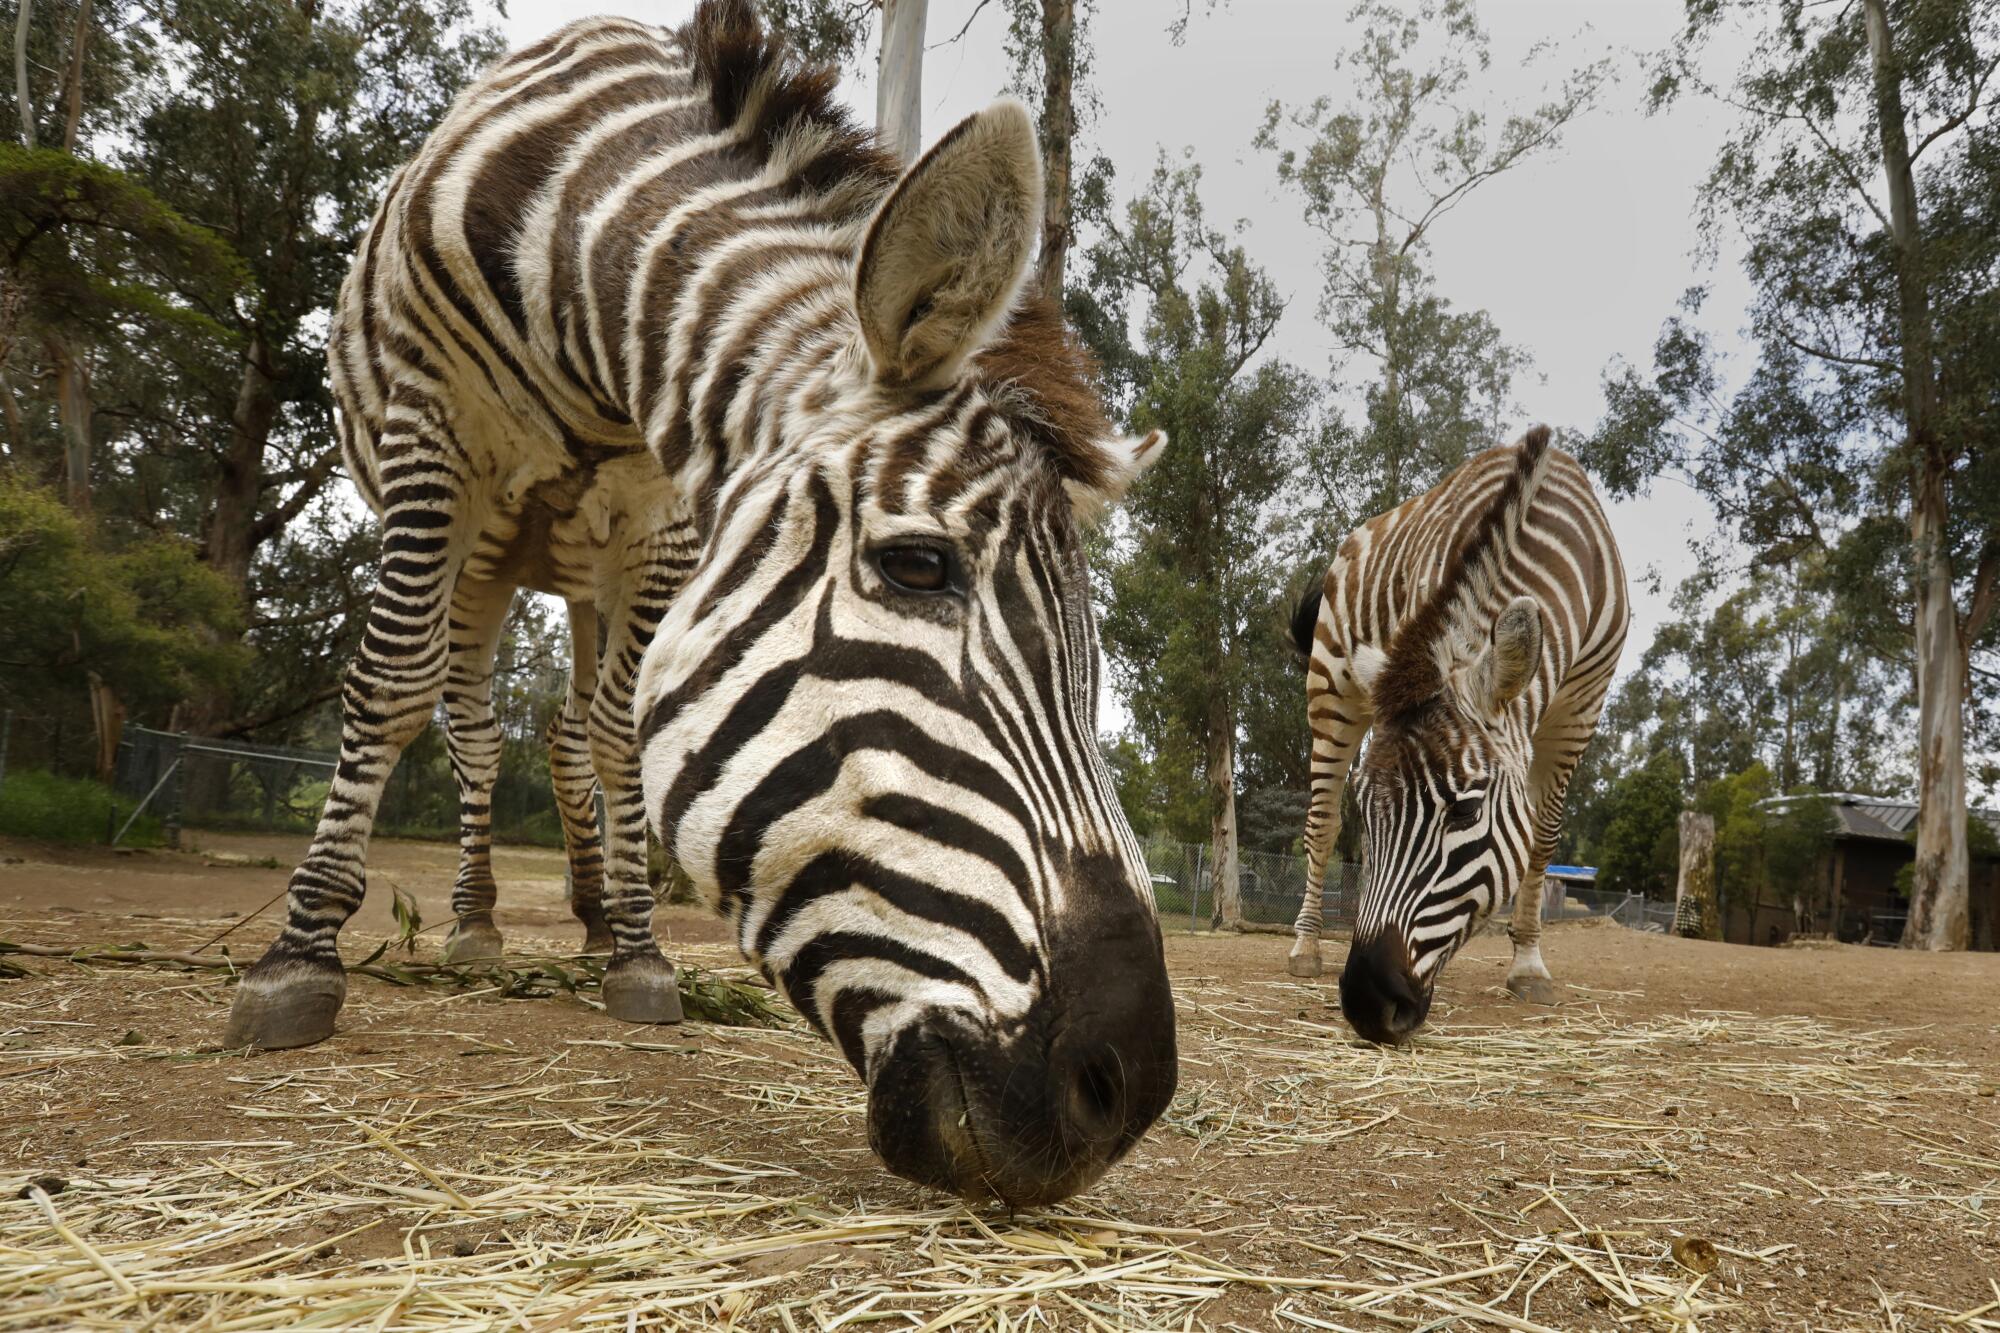 Zebras eat pellets off the ground